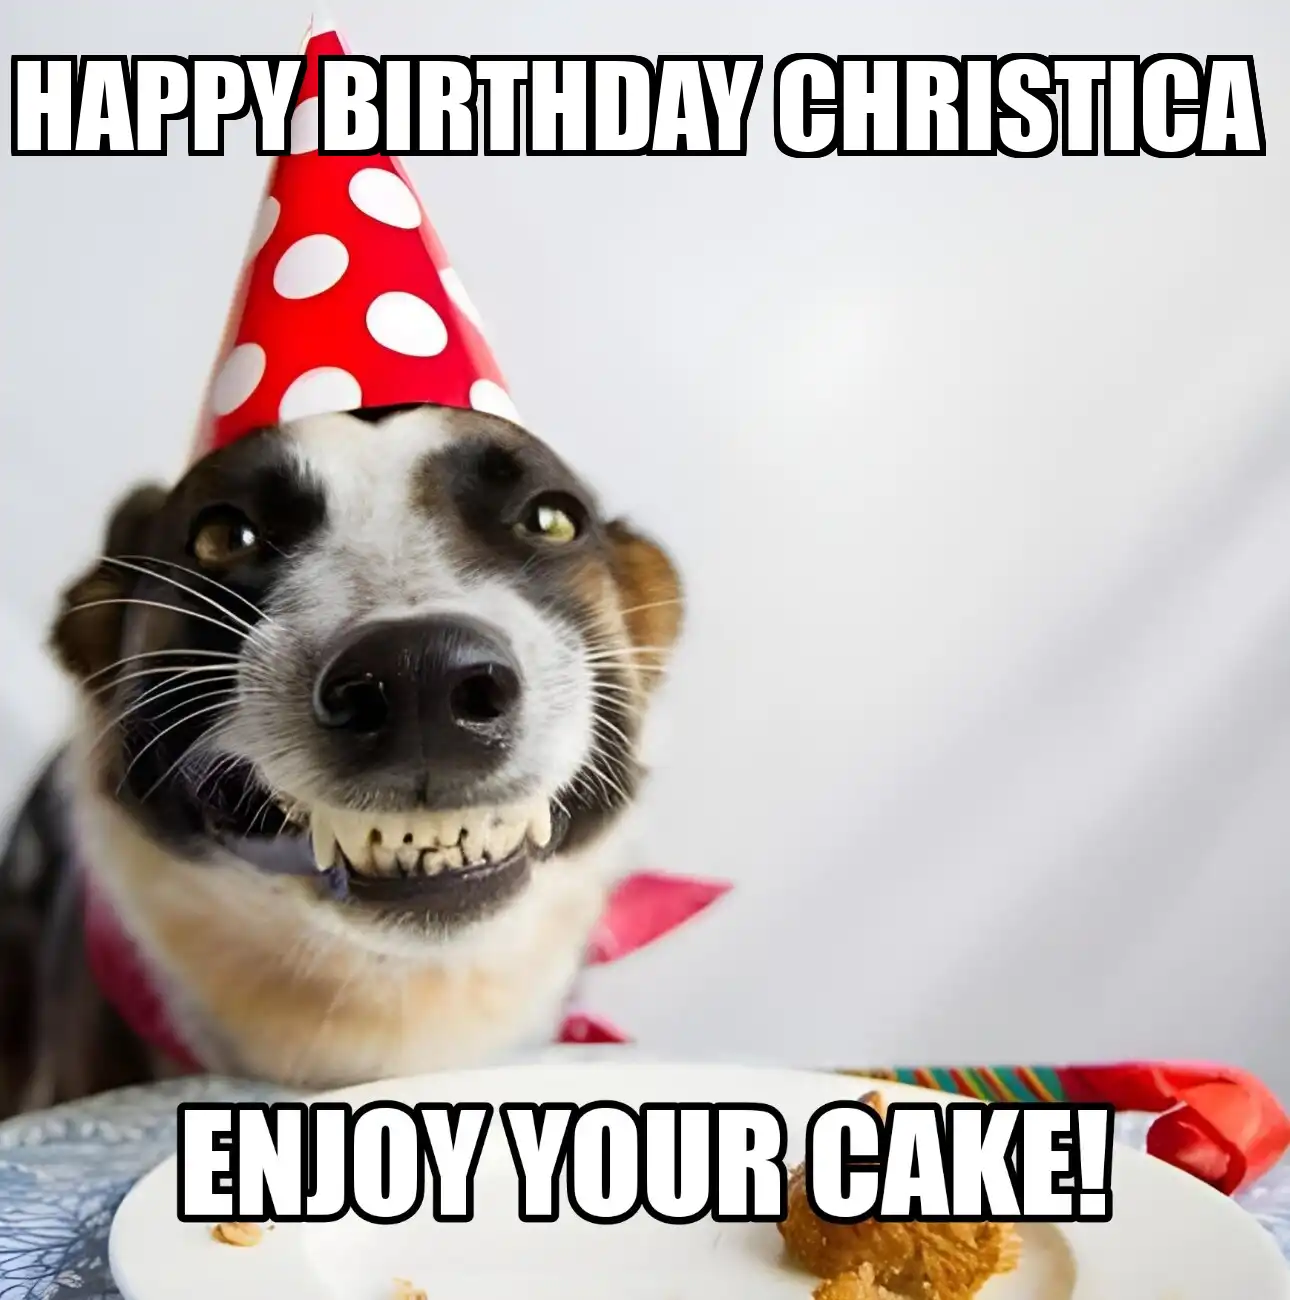 Happy Birthday Christica Enjoy Your Cake Dog Meme